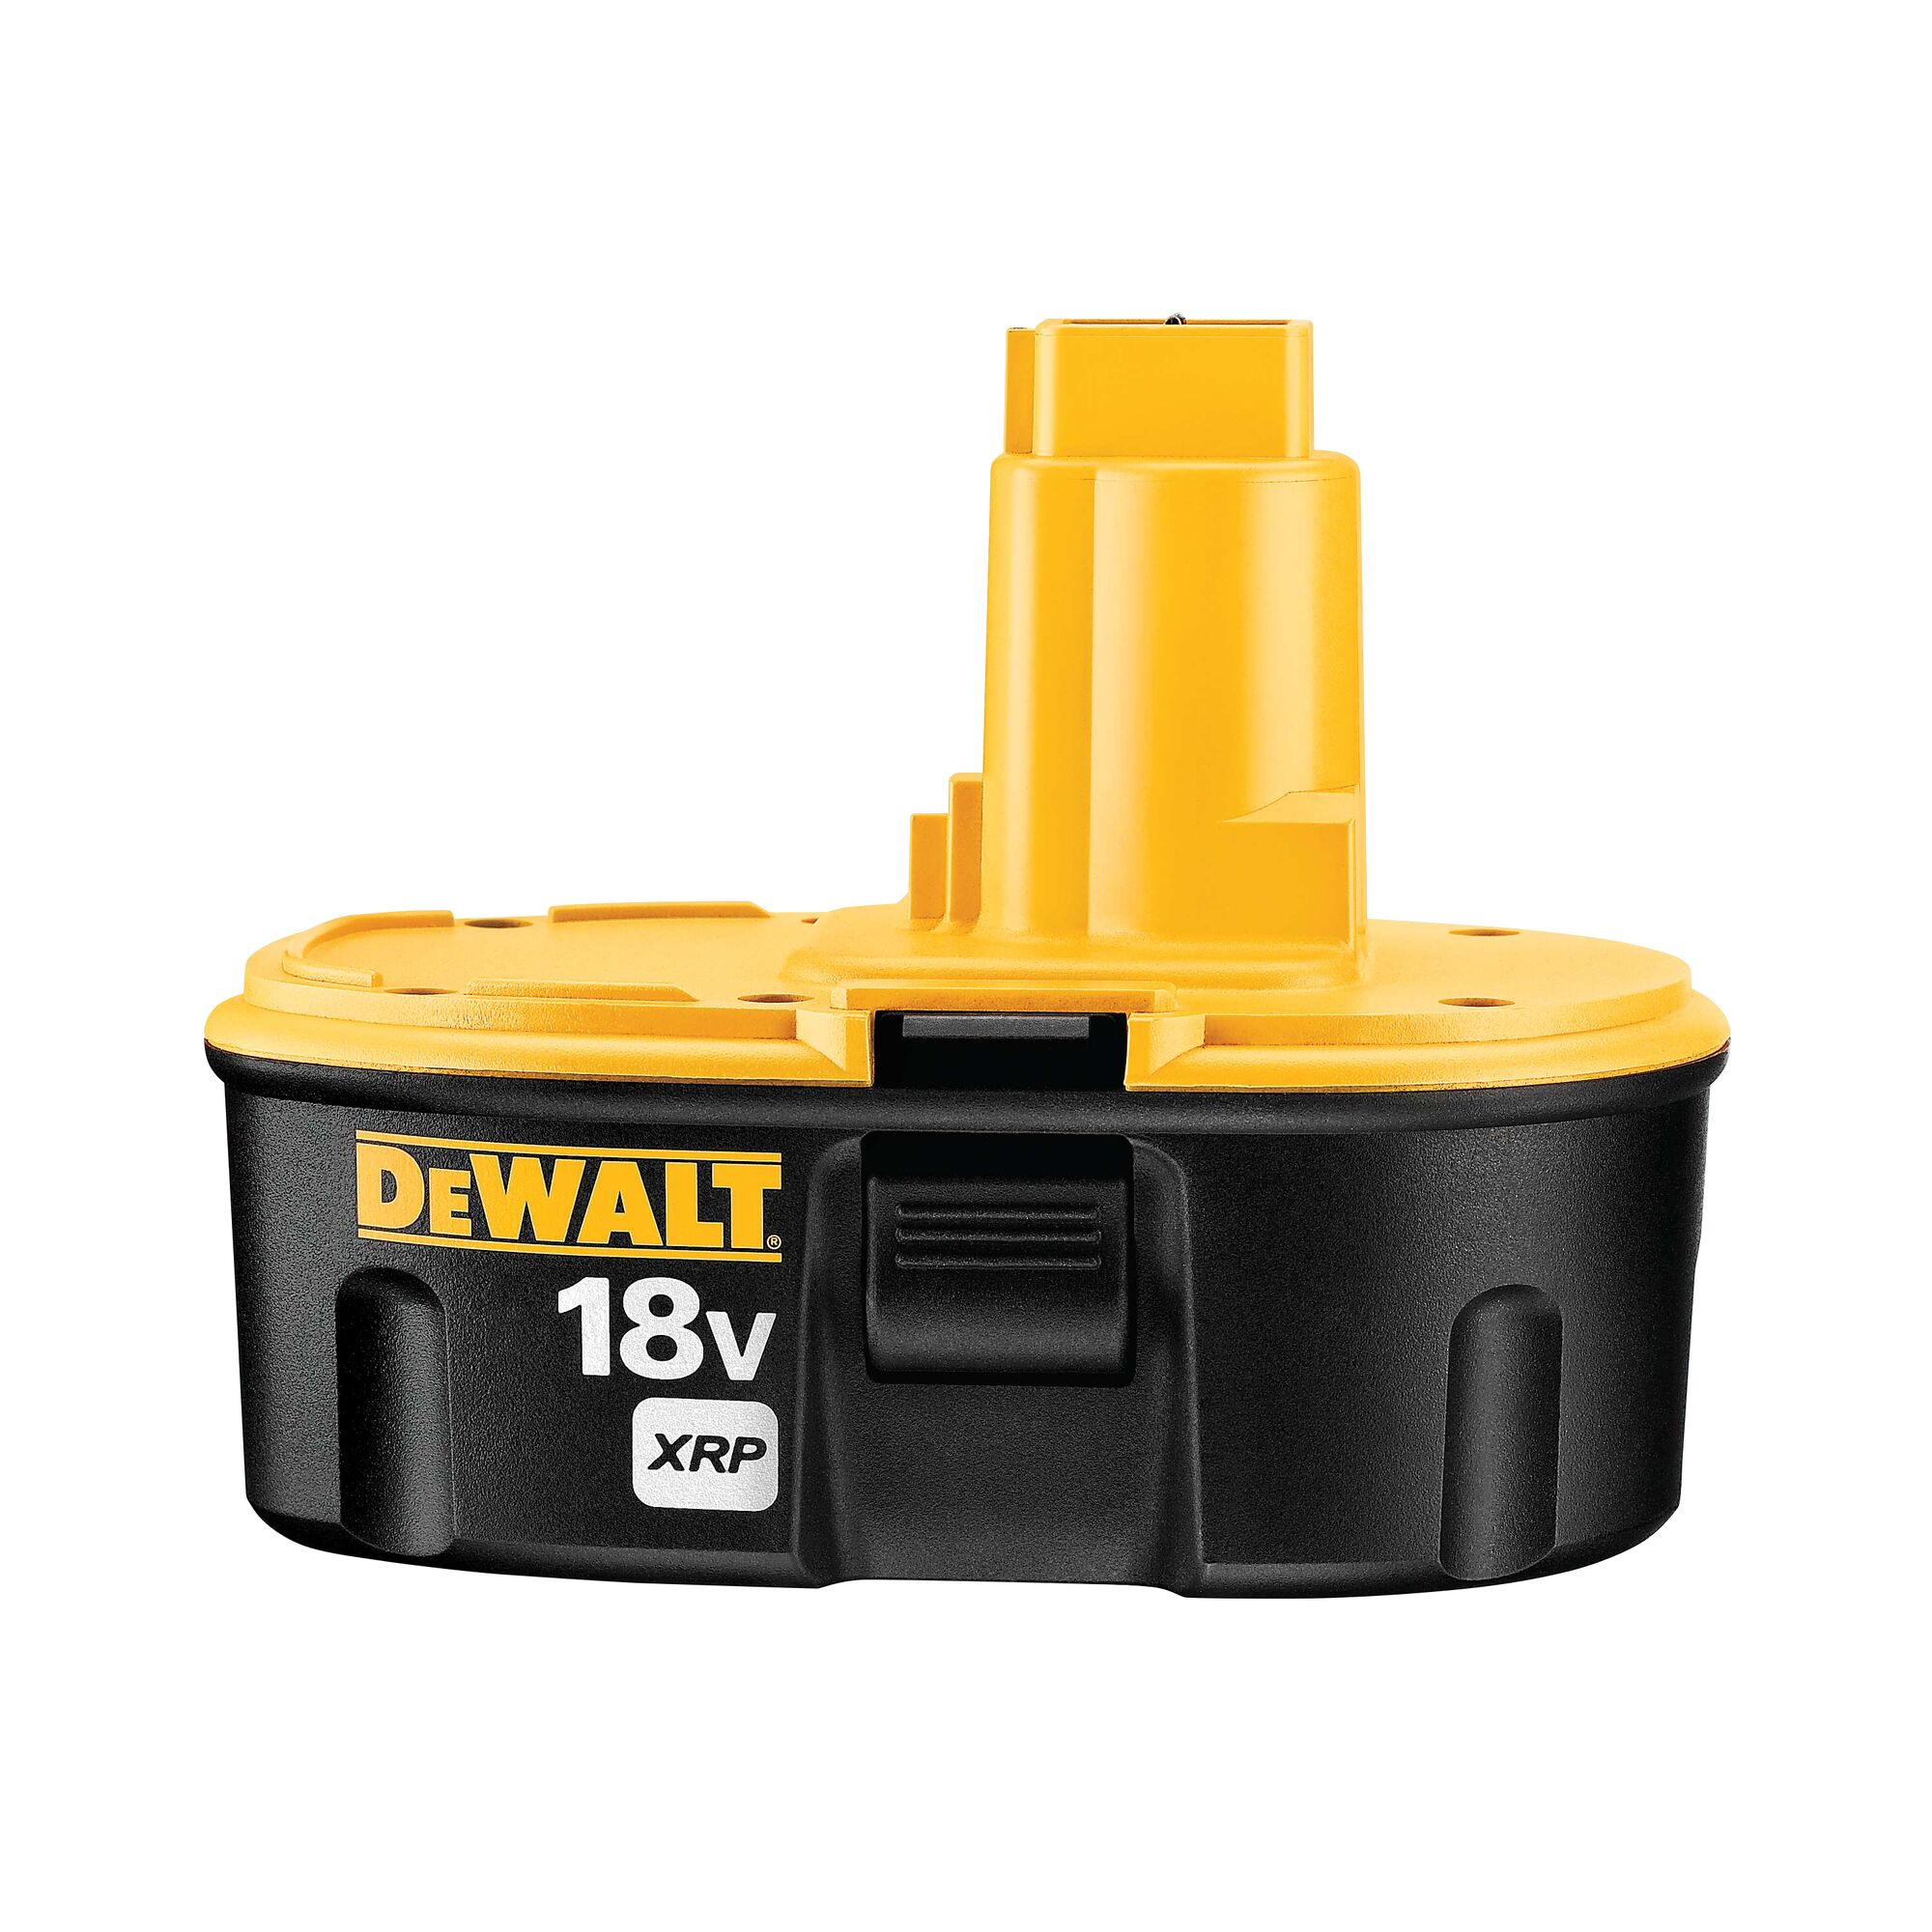 2 Pack Replace for Dewalt 18V XRP Battery DC9096 DC9099 DC9098 DW9099 DW9098 Compatible Replacement Cordless Power Tools 2000mAh Batteries 